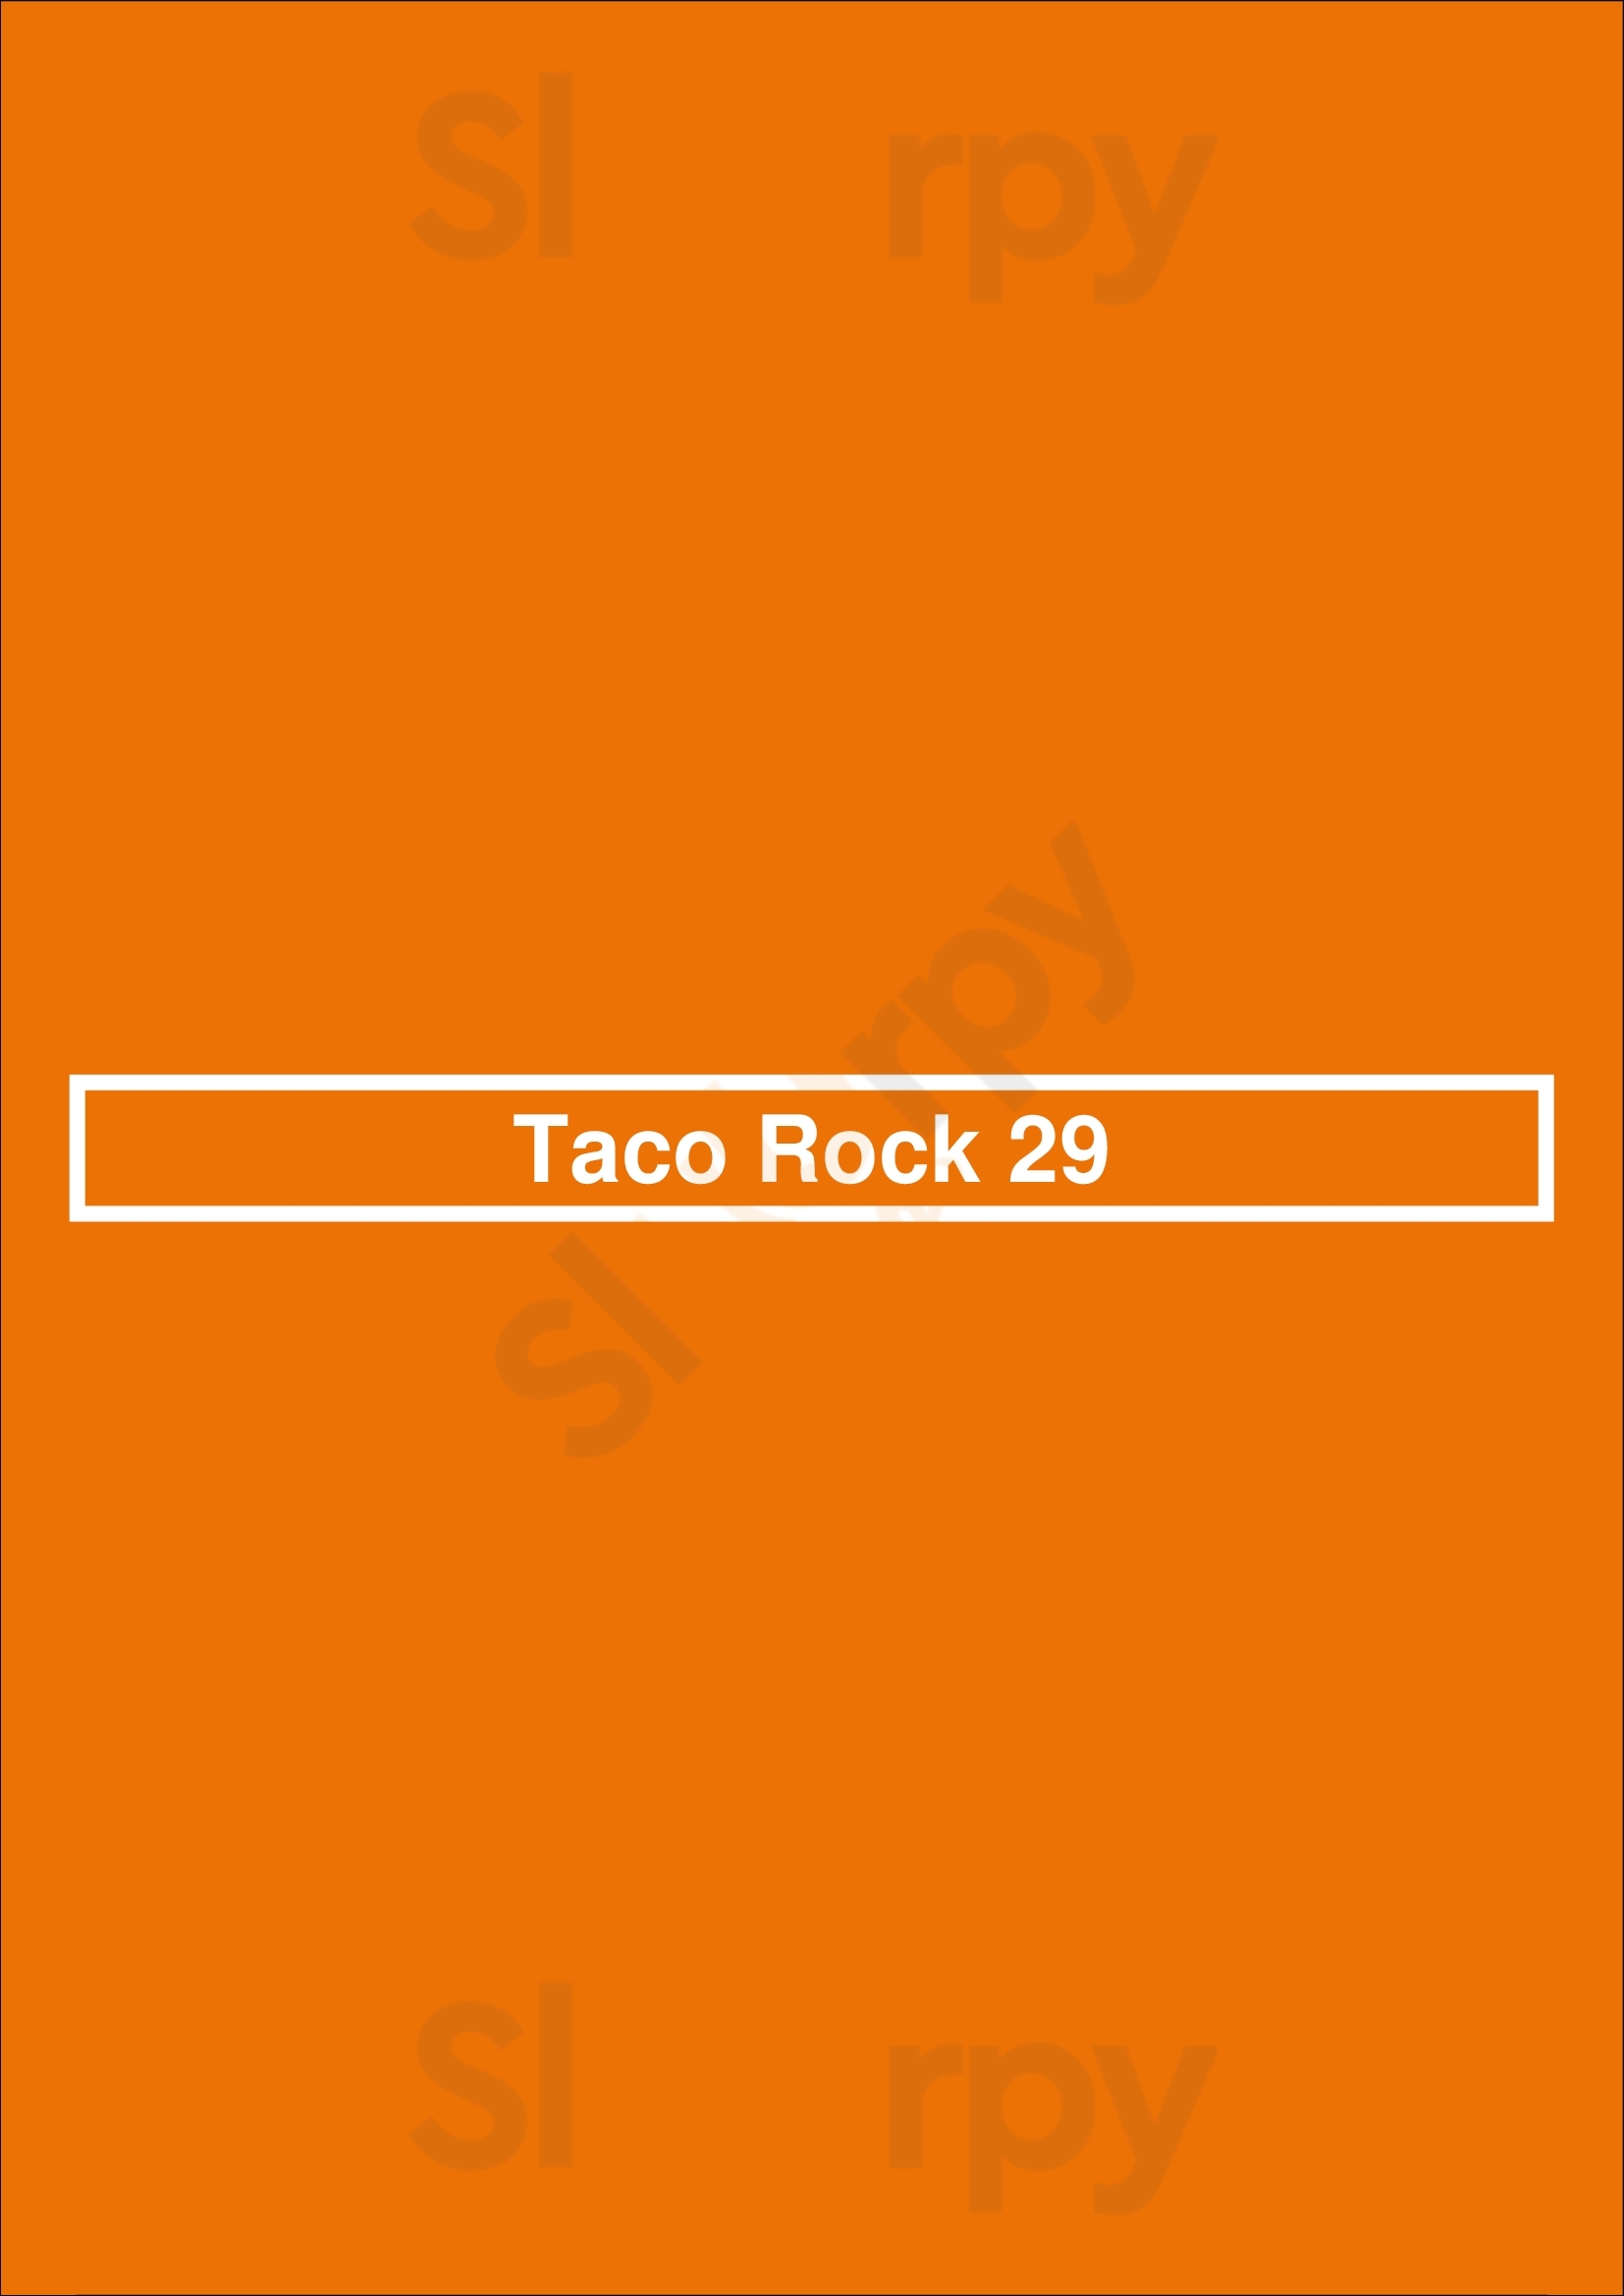 Taco Rock 29 Pensacola Menu - 1